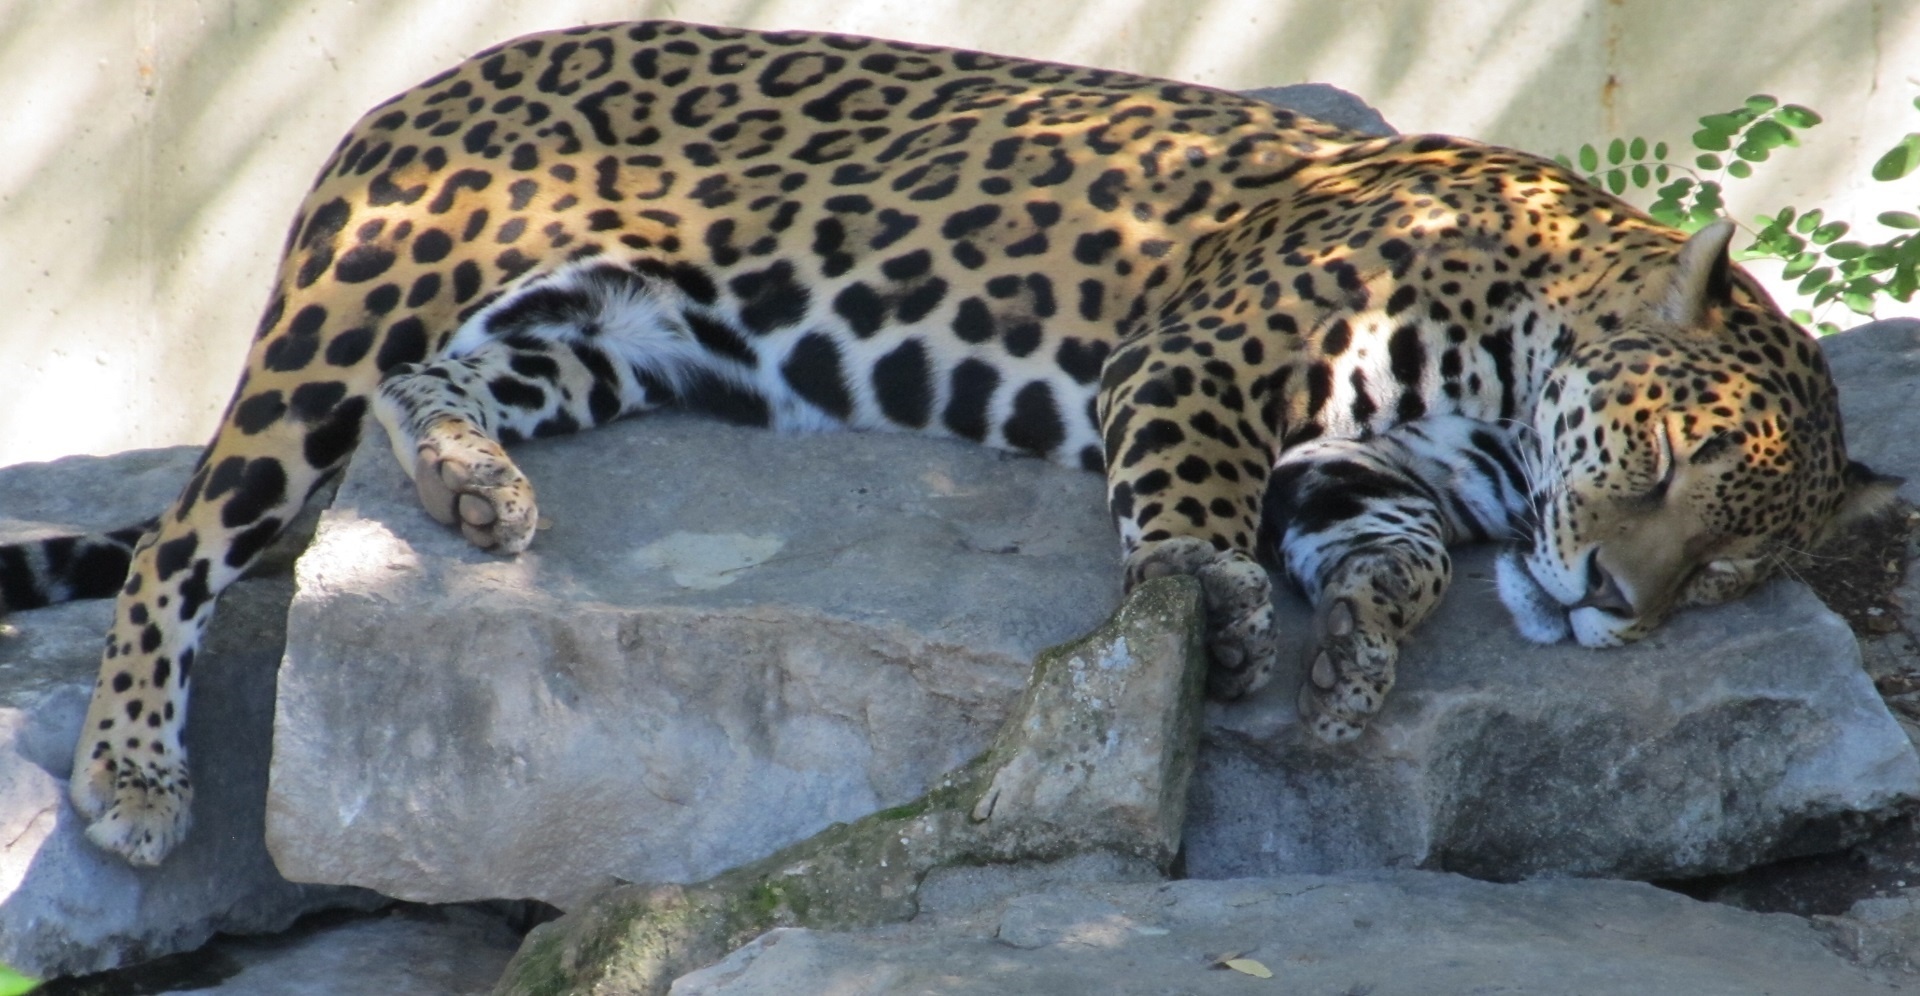 Jaguar Sleeping